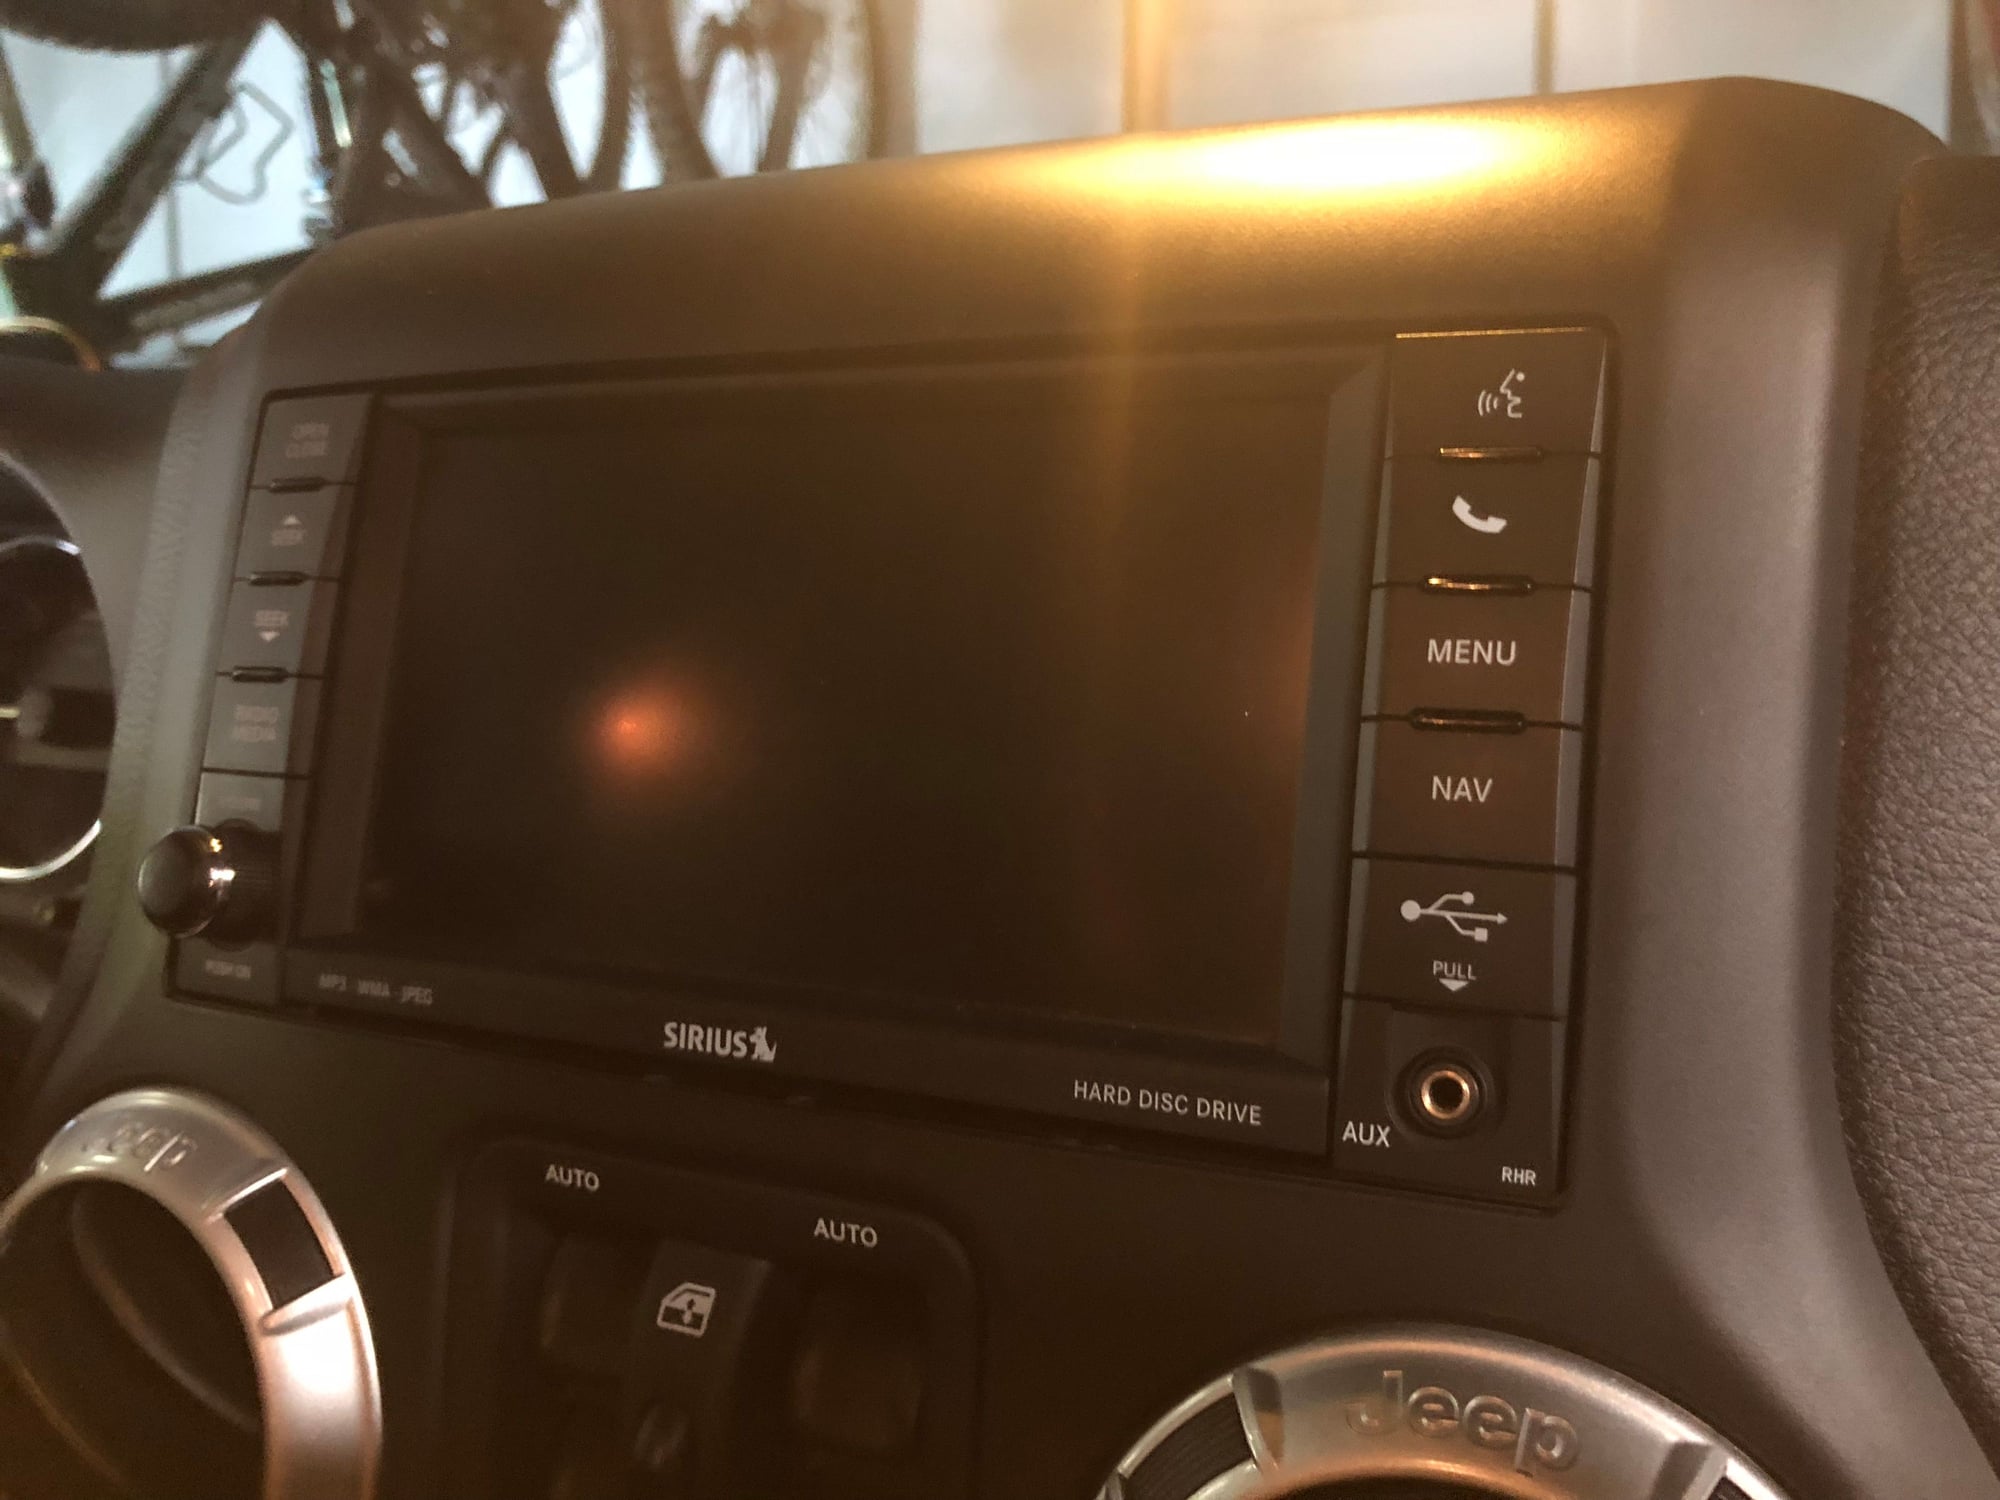 Audio Video/Electronics - 730n radio - Used - 2007 to 2017 Jeep Wrangler - Chatsworth, CA 91311, United States